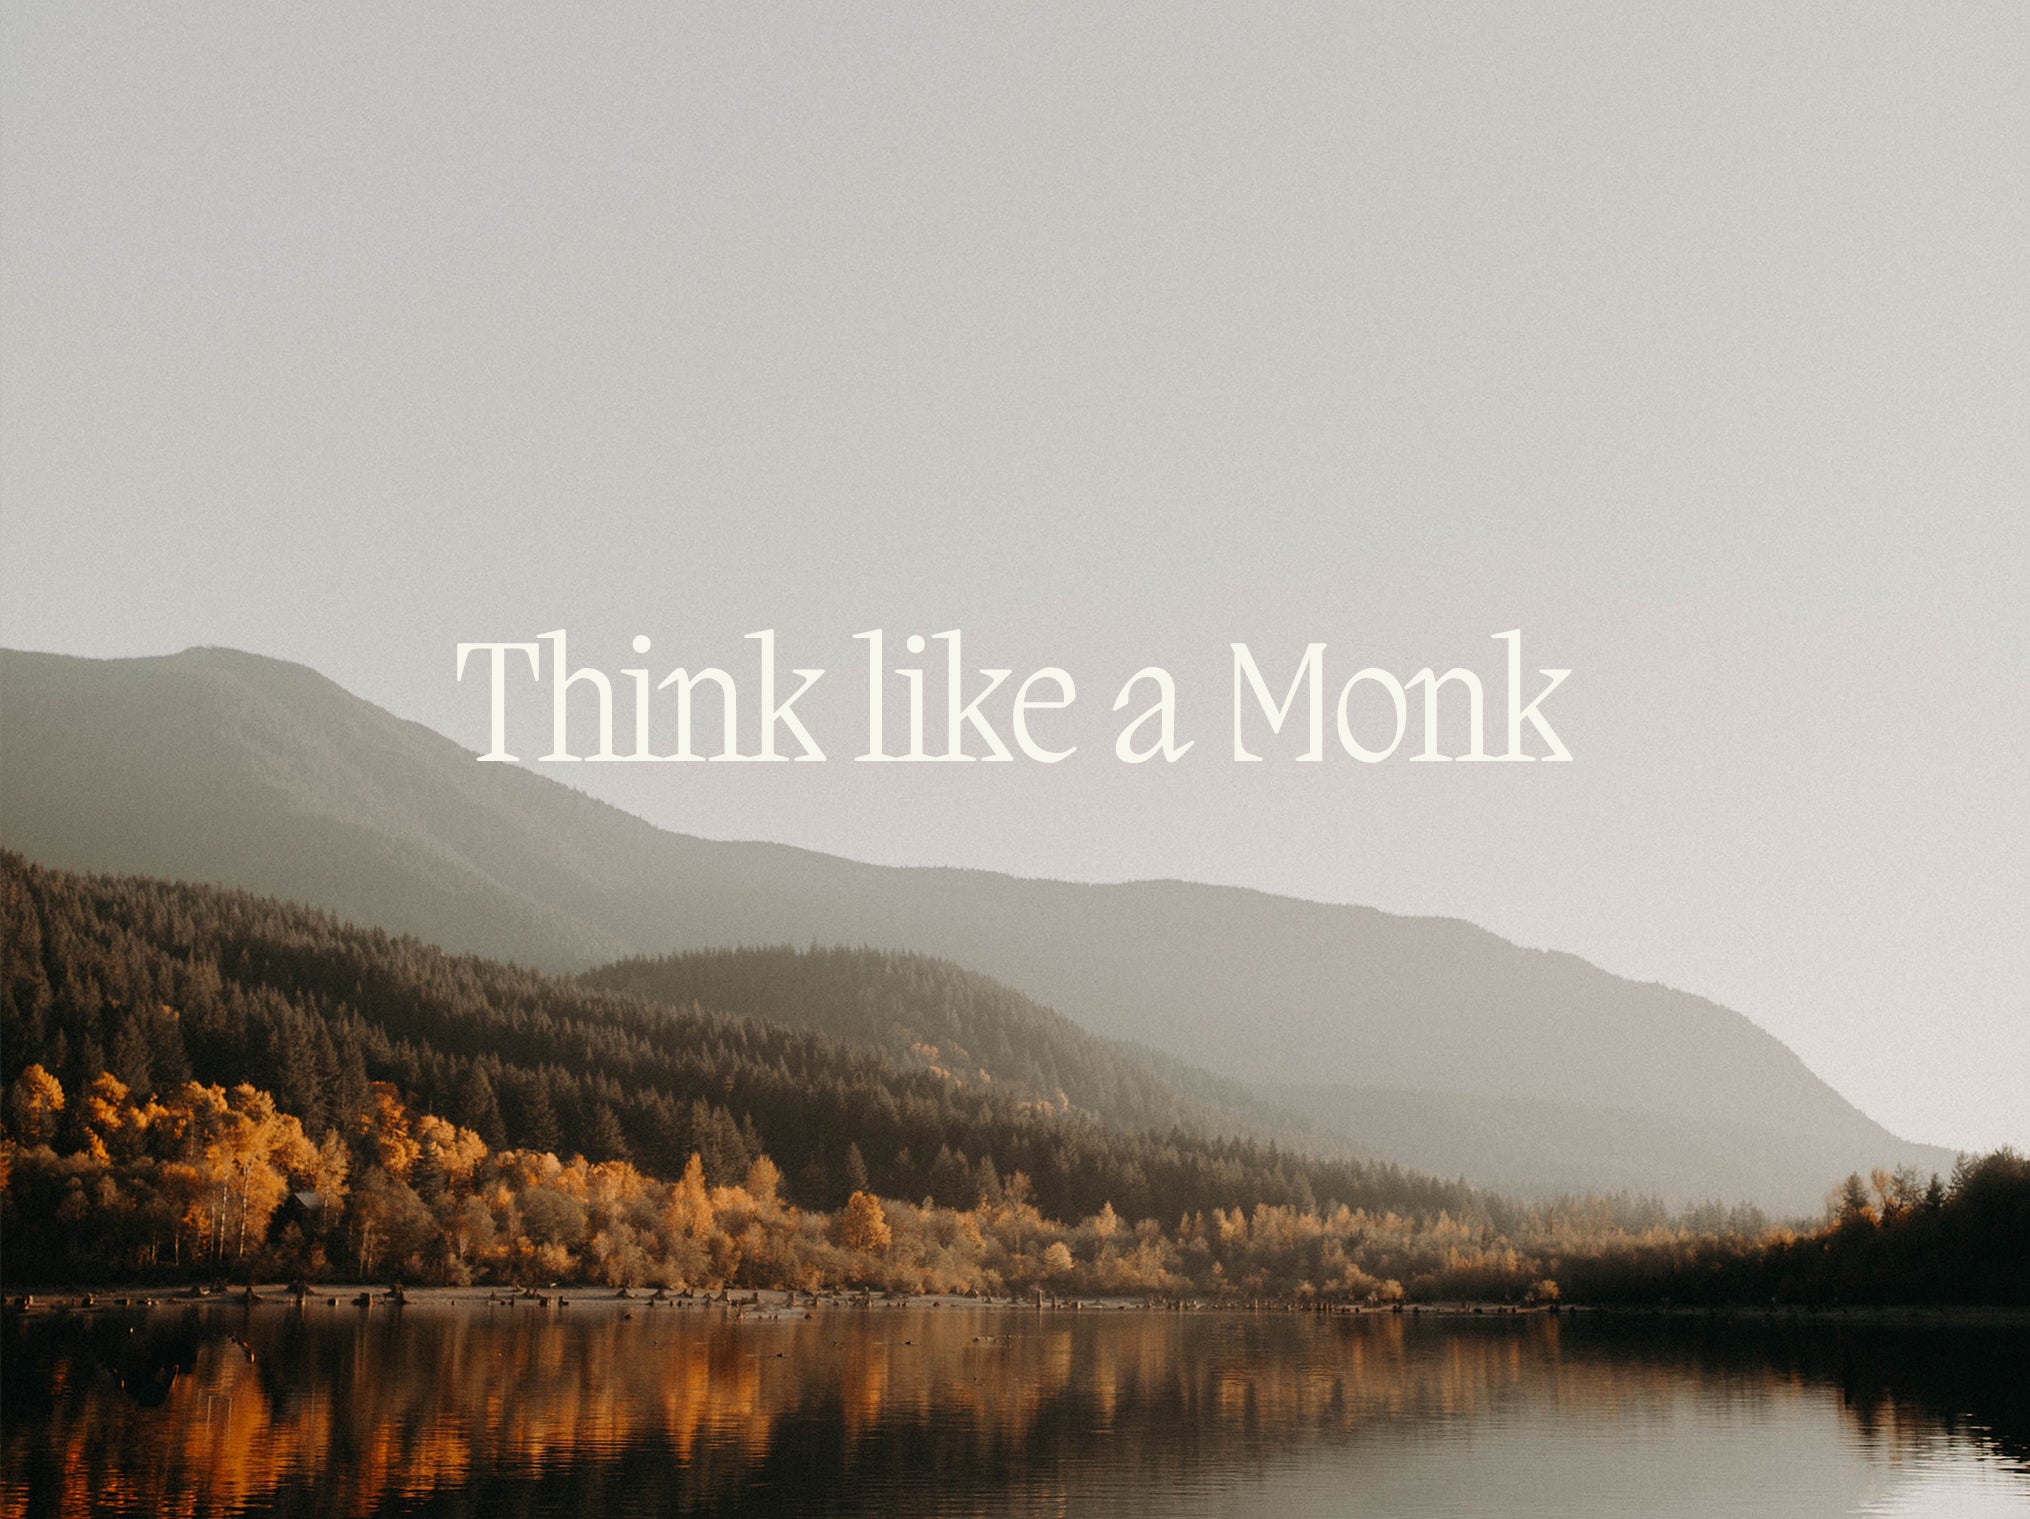 Video laden: namoMonk think like a monk